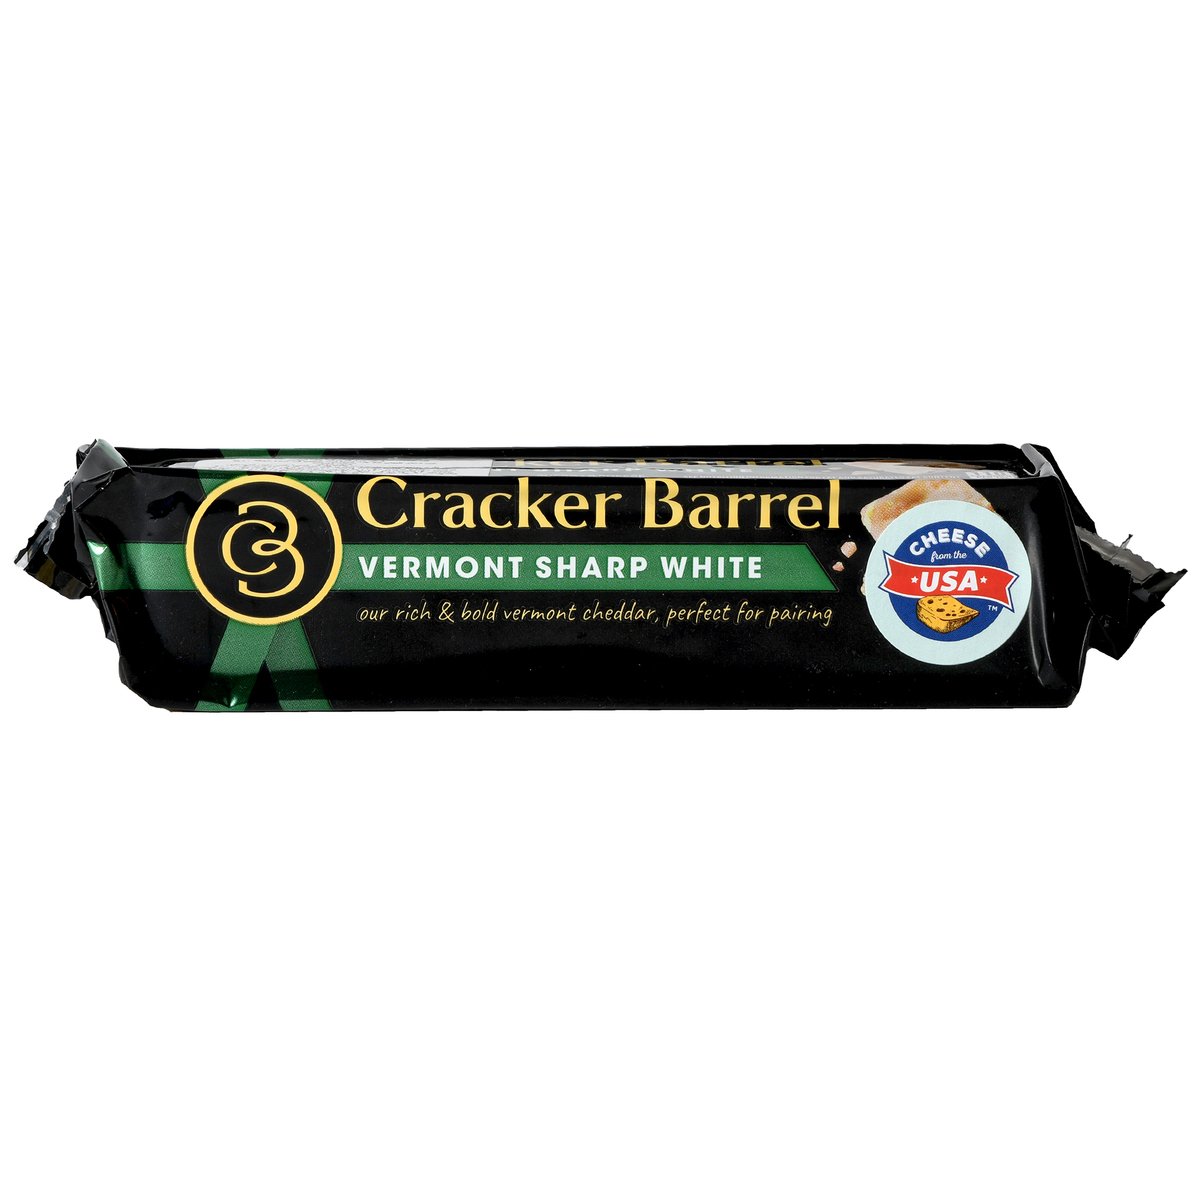 Cracker Barrel Vermont Sharp White Cheddar 226 g